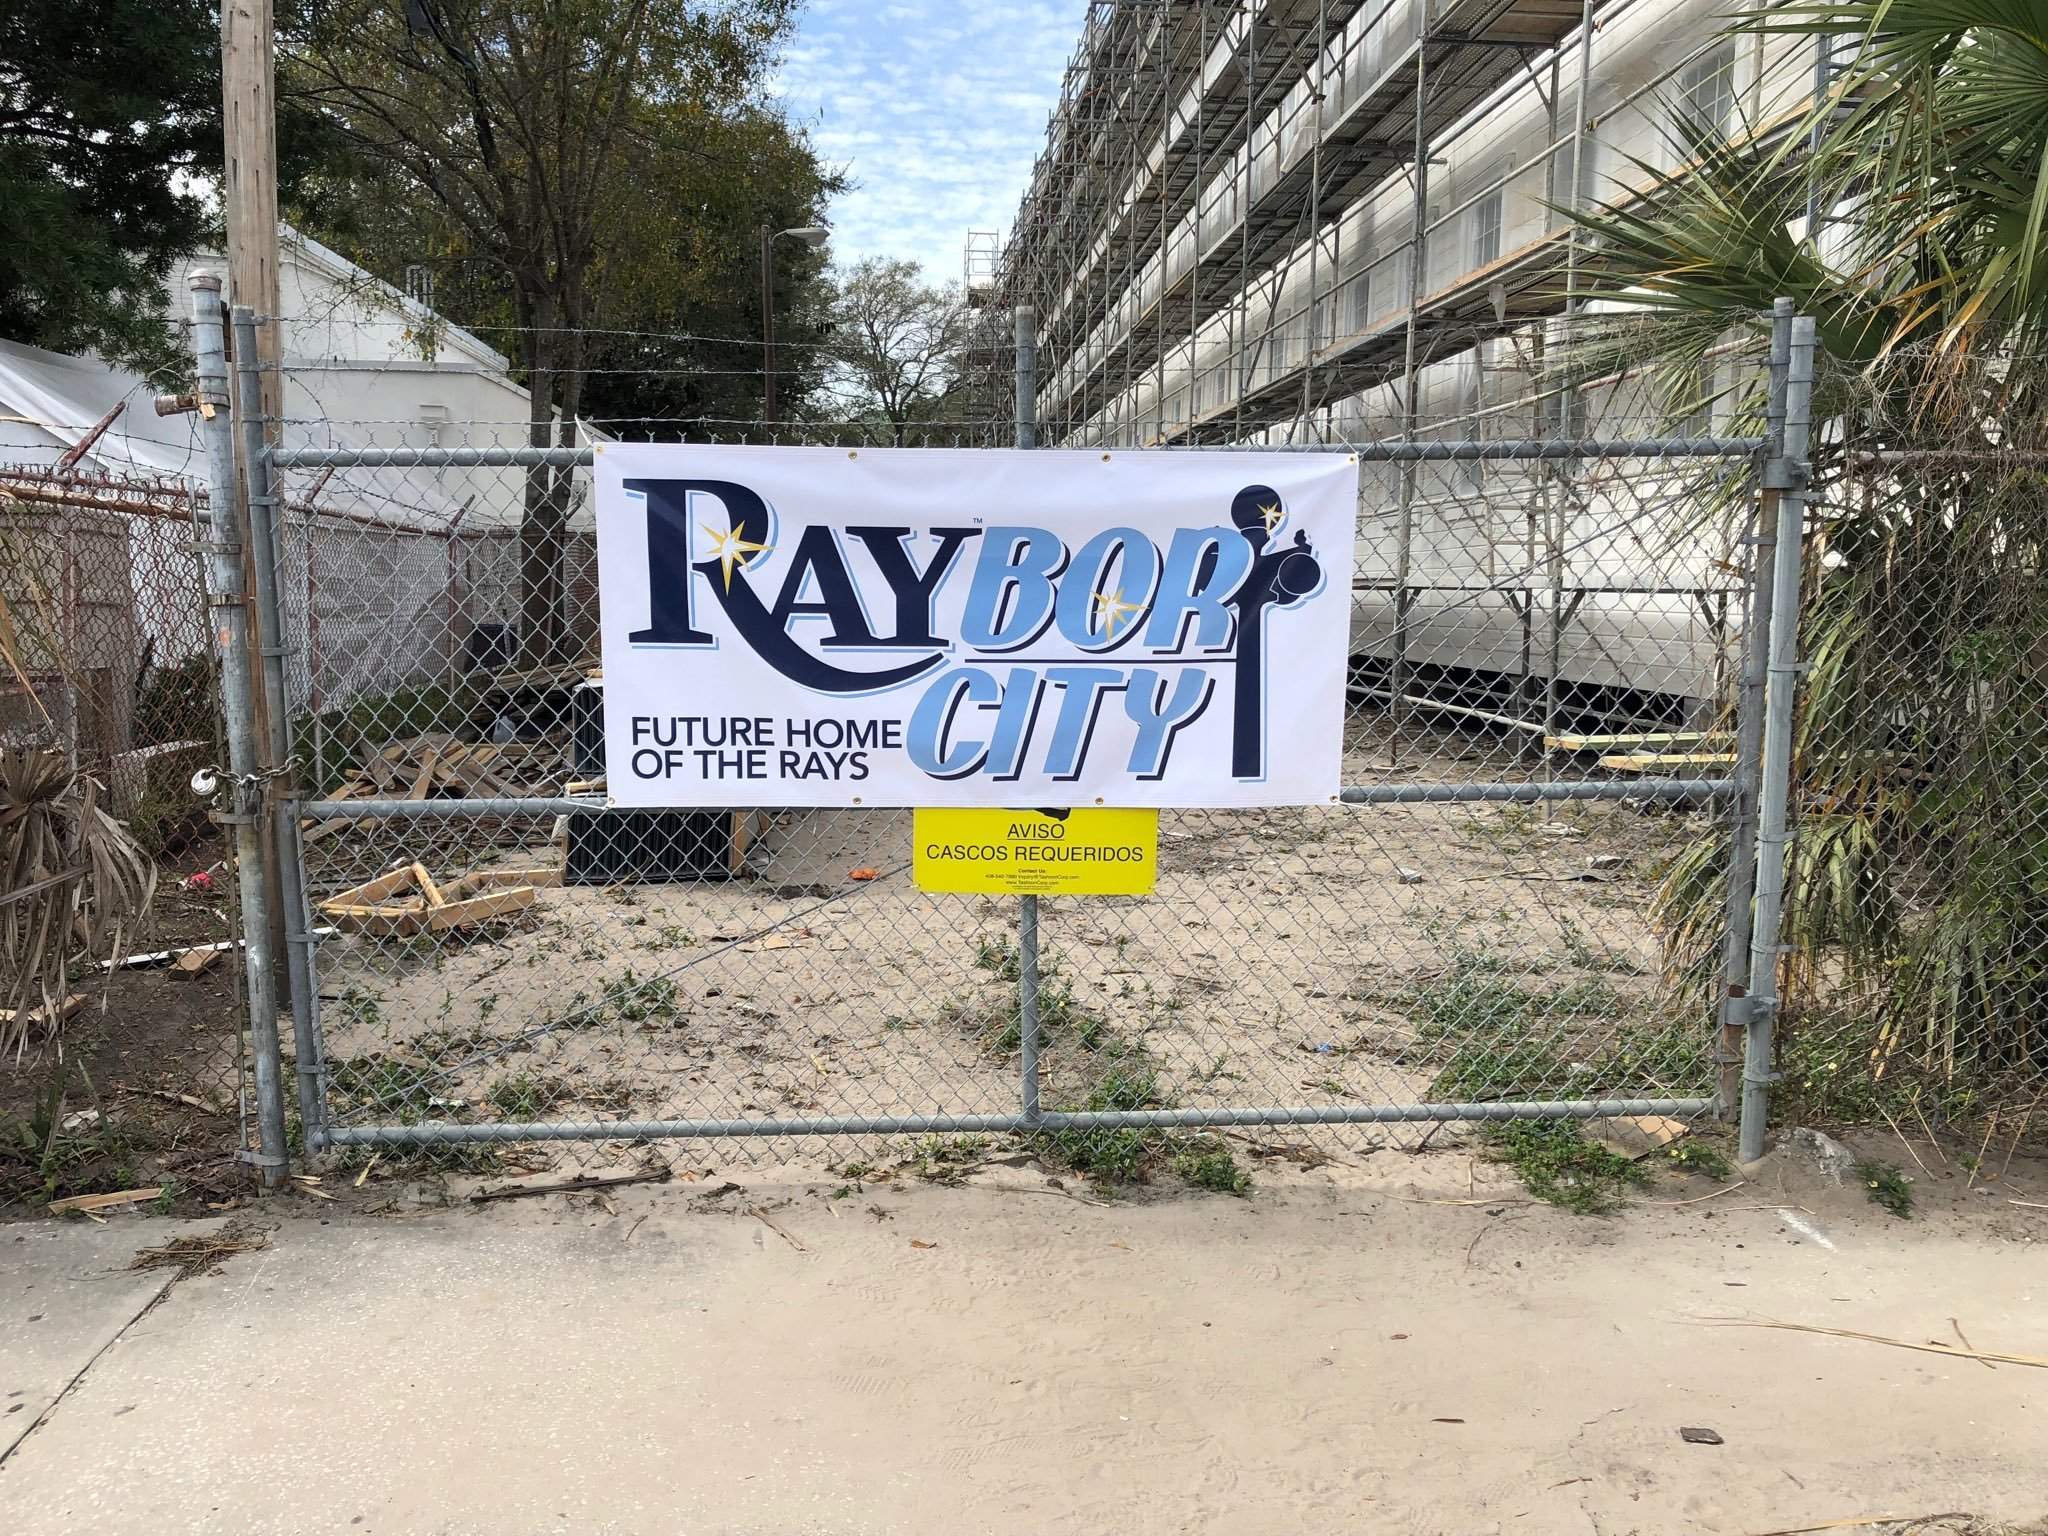 Rays City Connect #rays #tampa #tampabay #tampabayrays #florida